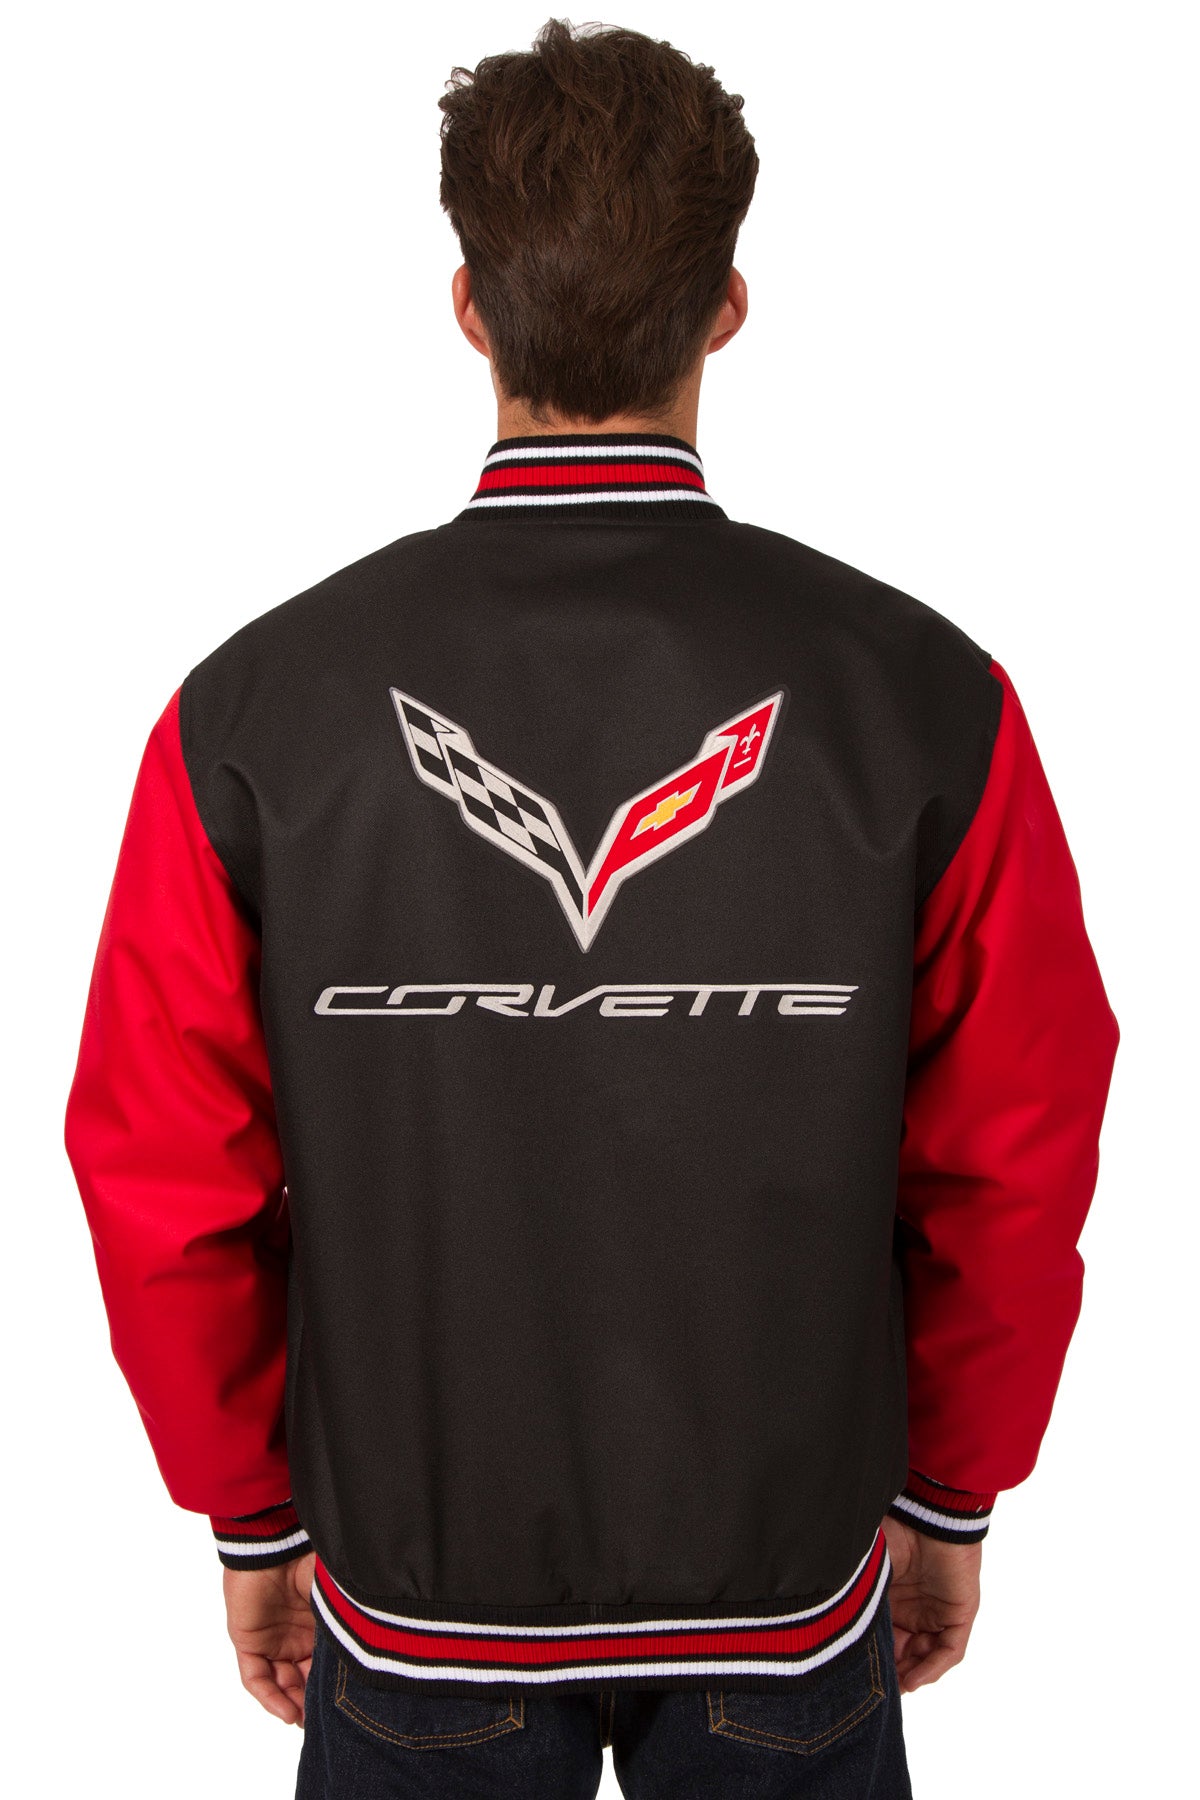 Corvette Poly-Twill Jacket